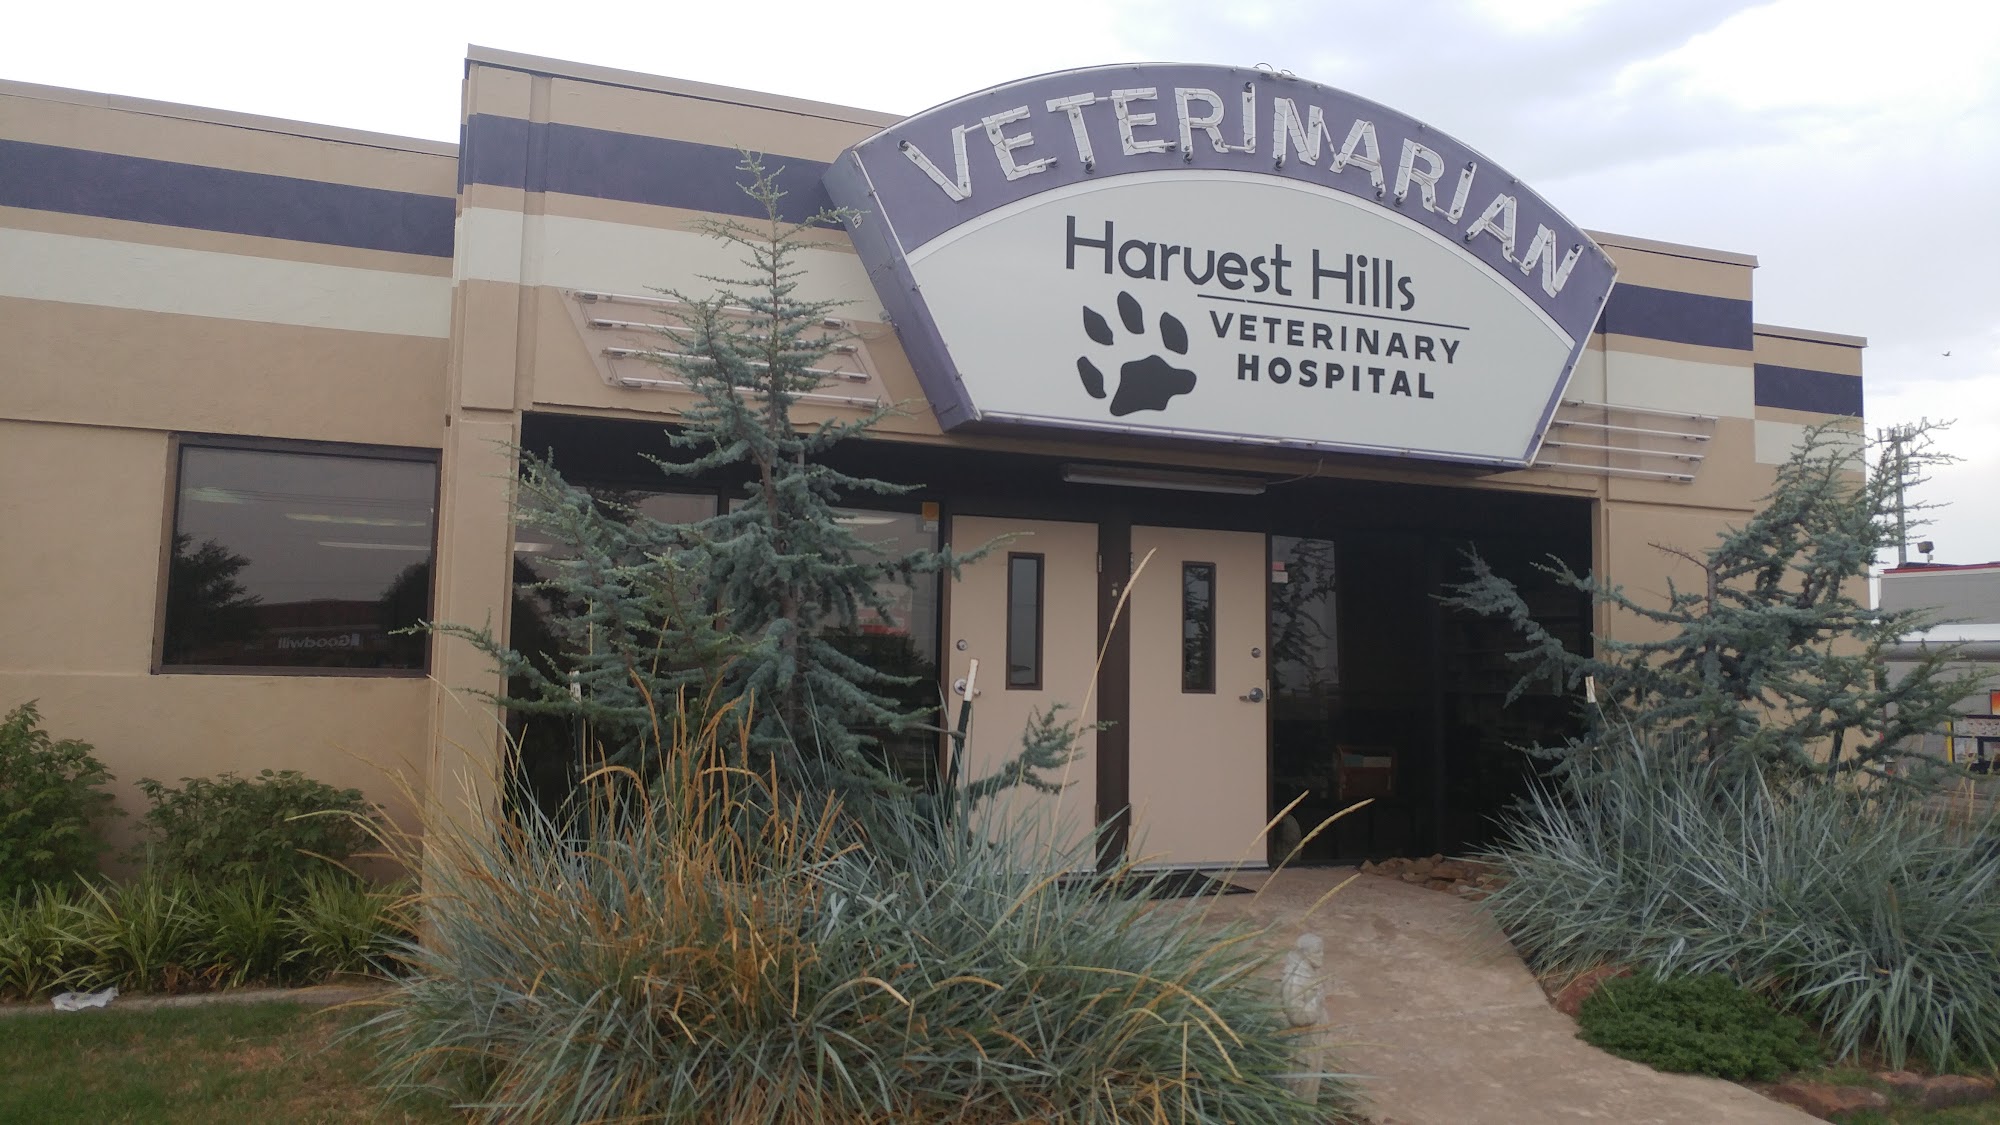 Harvest Hills Veterinary Hospital